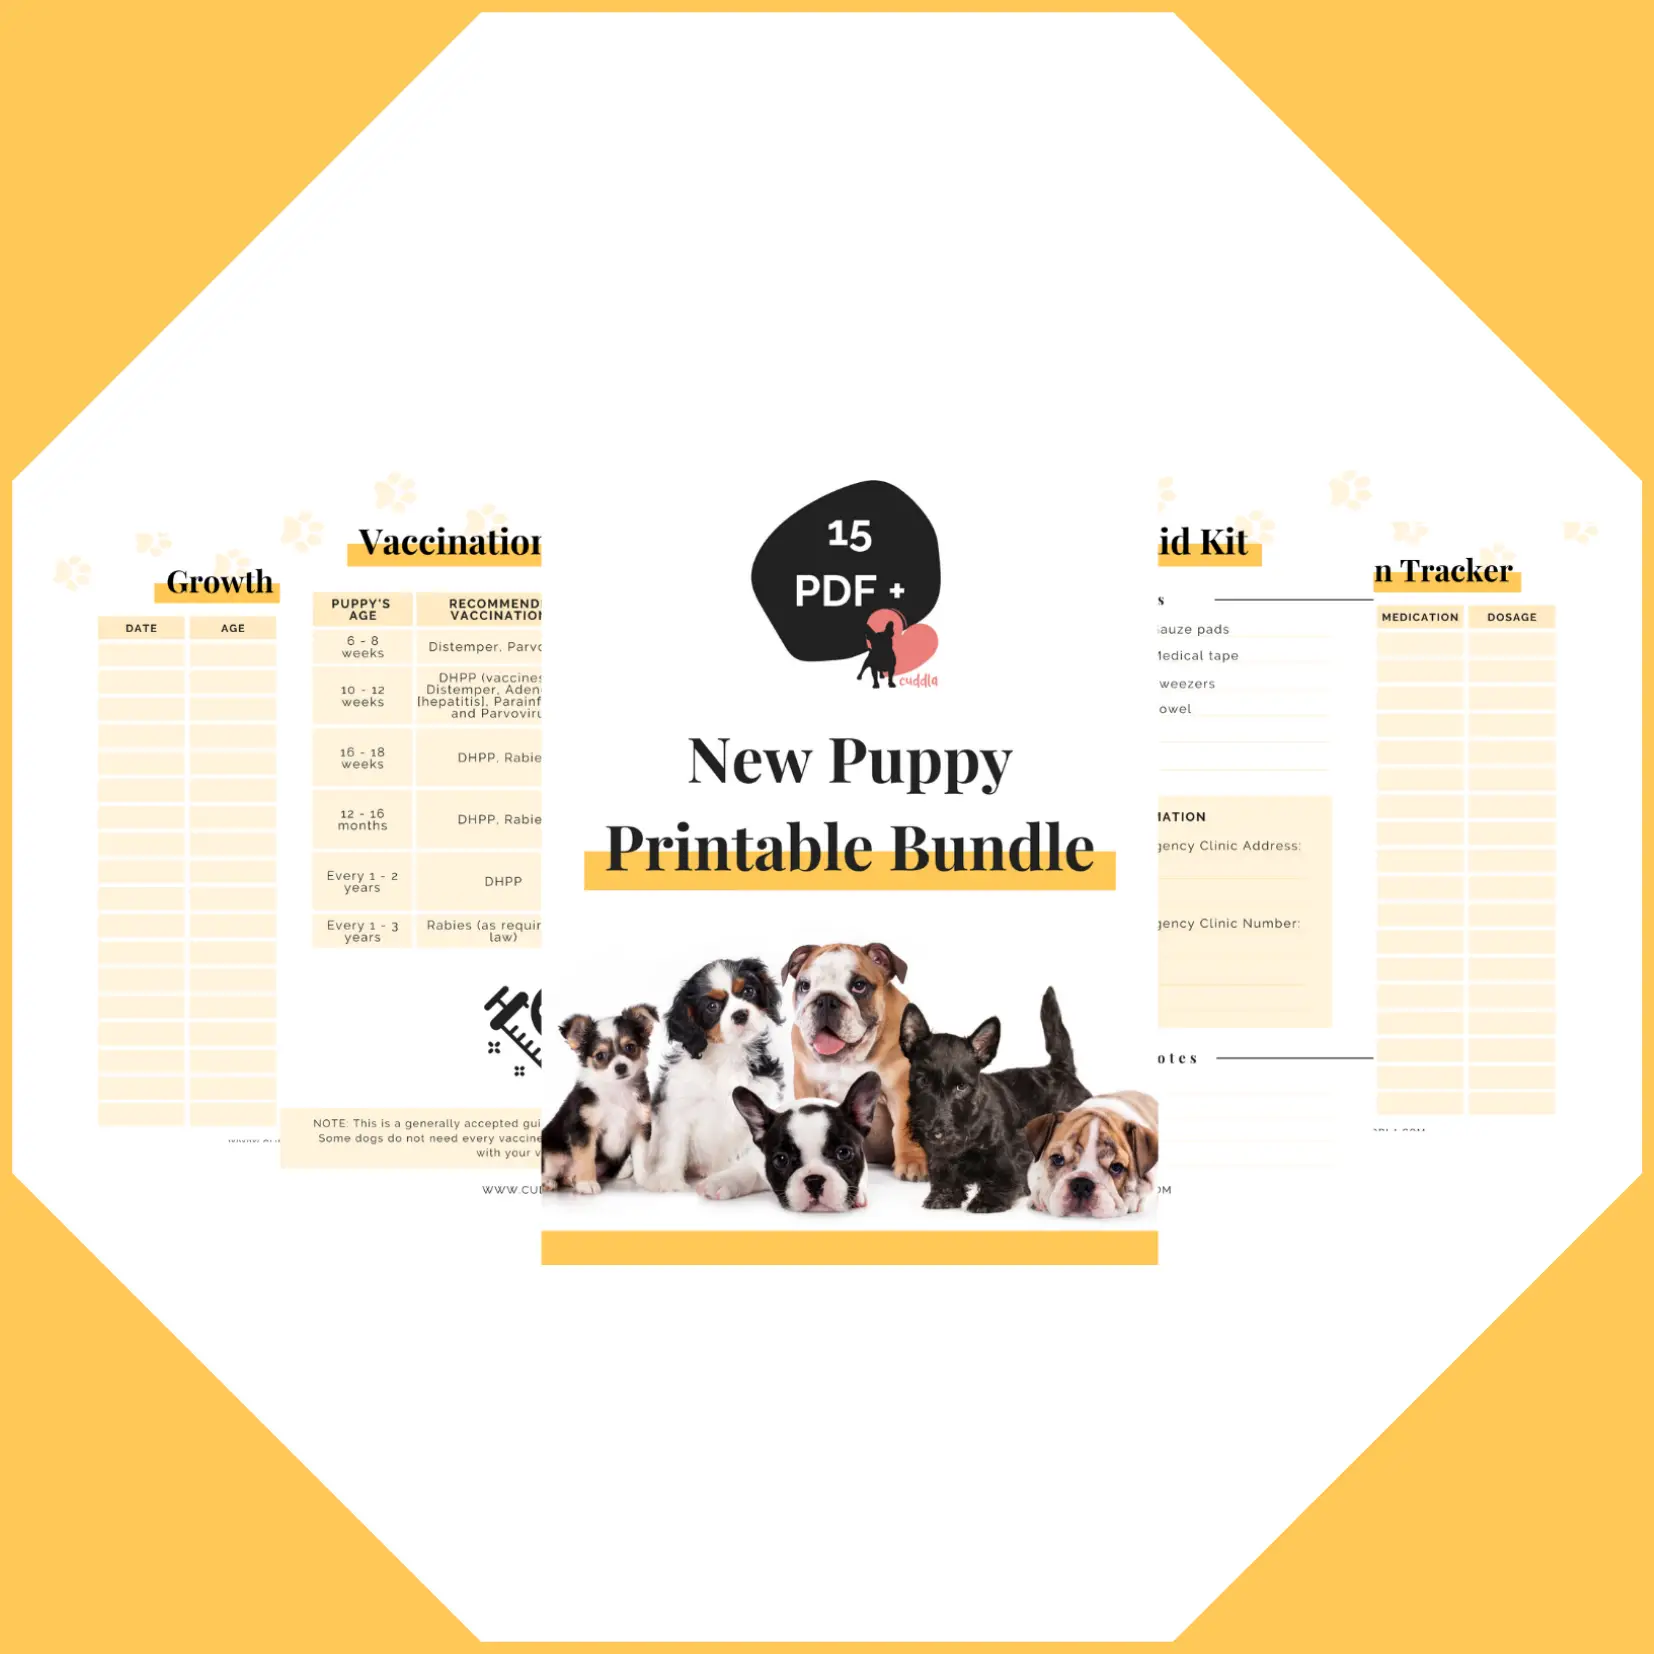 cuddla-resources-new-puppy-printable-bundle-yellow